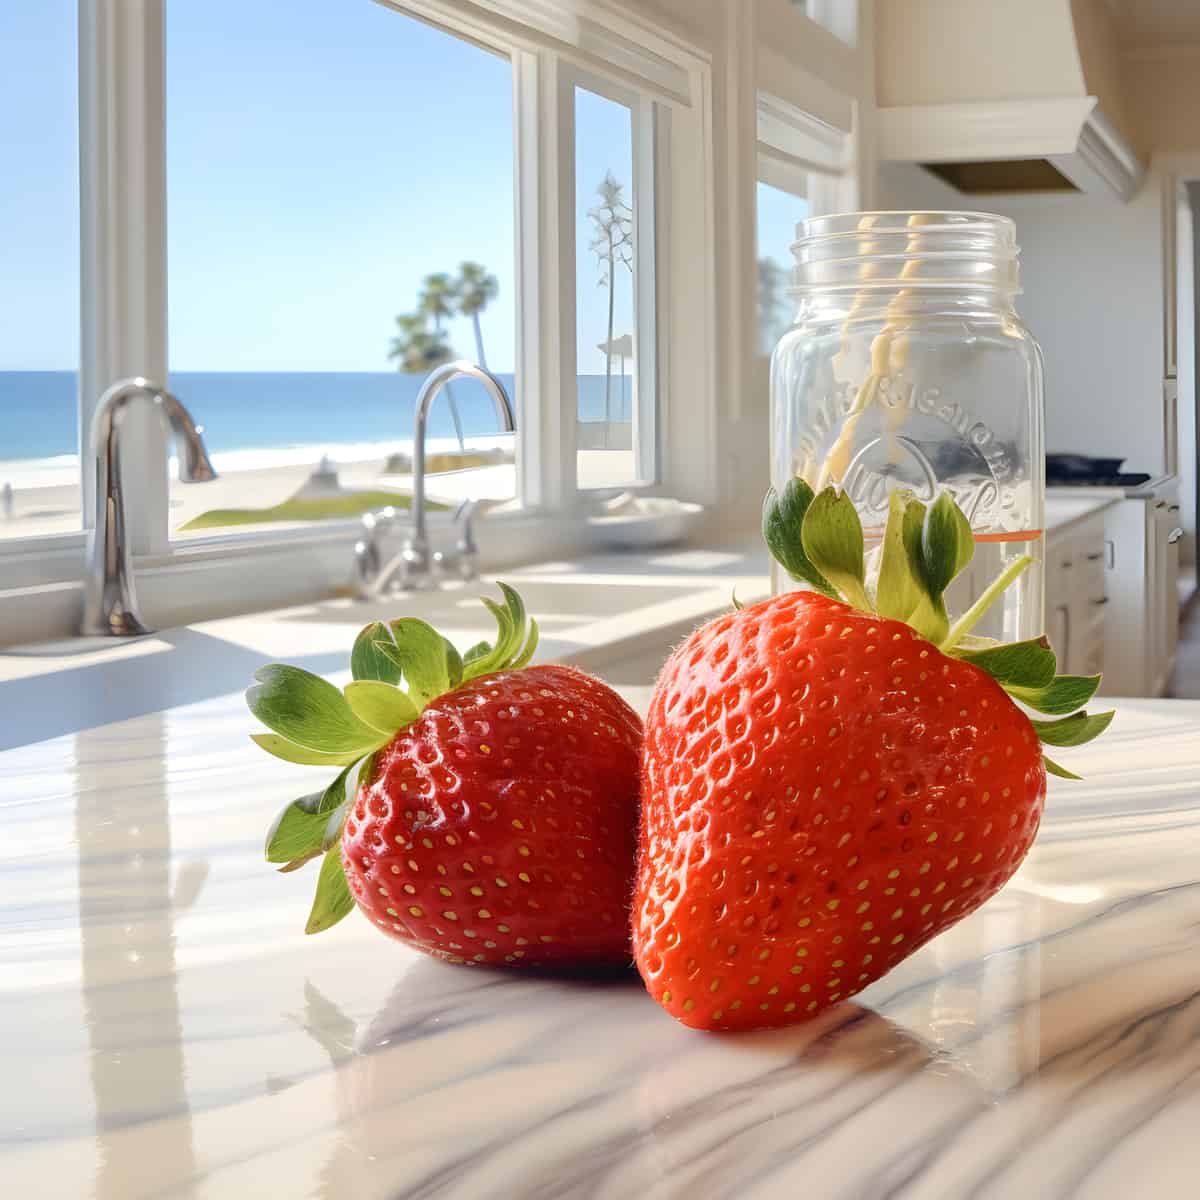 Beach Strawberries on a kitchen counter